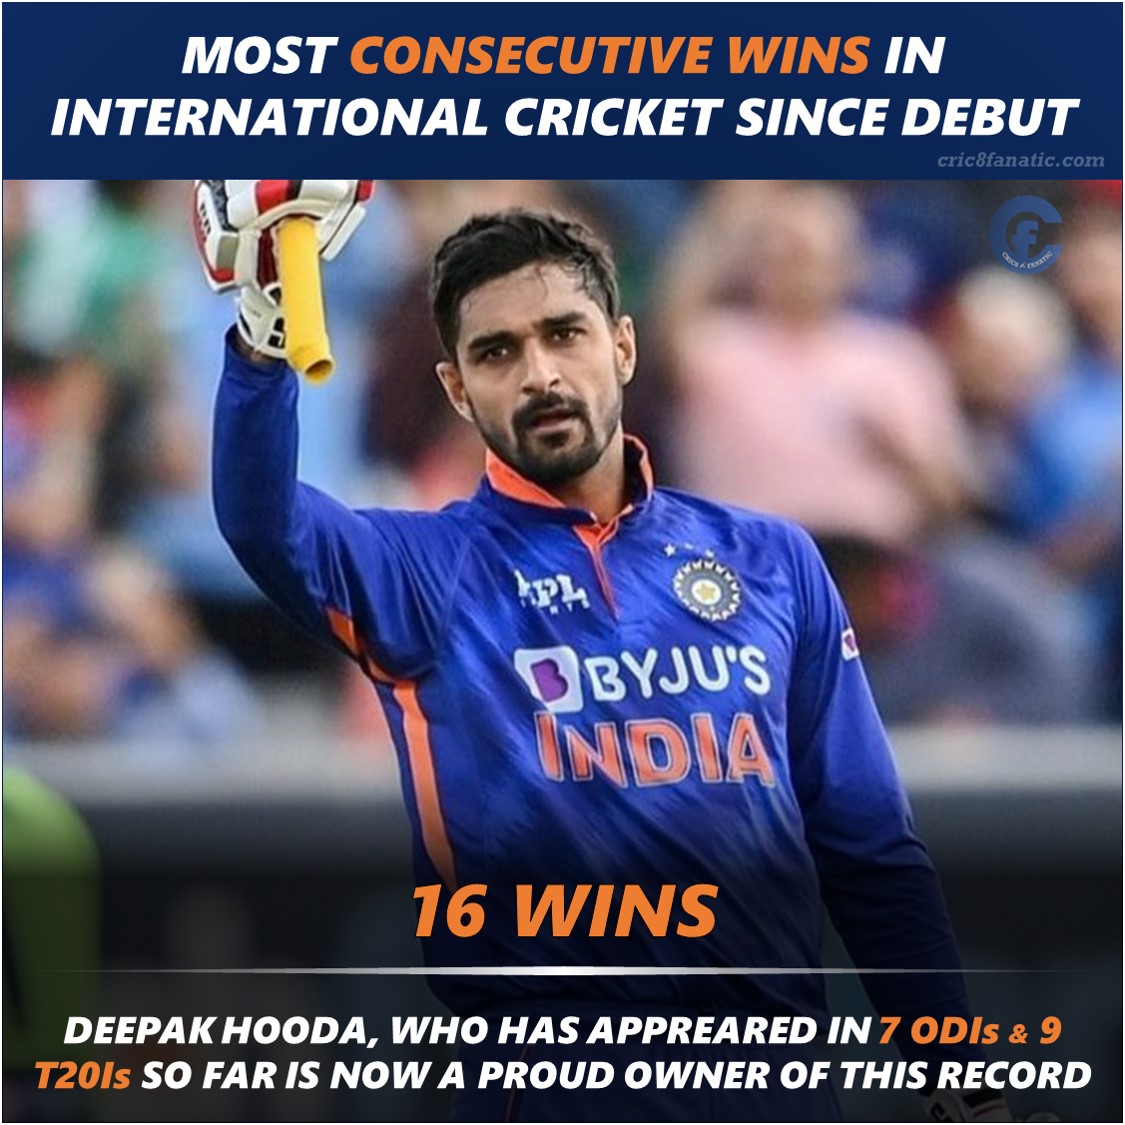 deepak hooda record international cricket cric8fantic